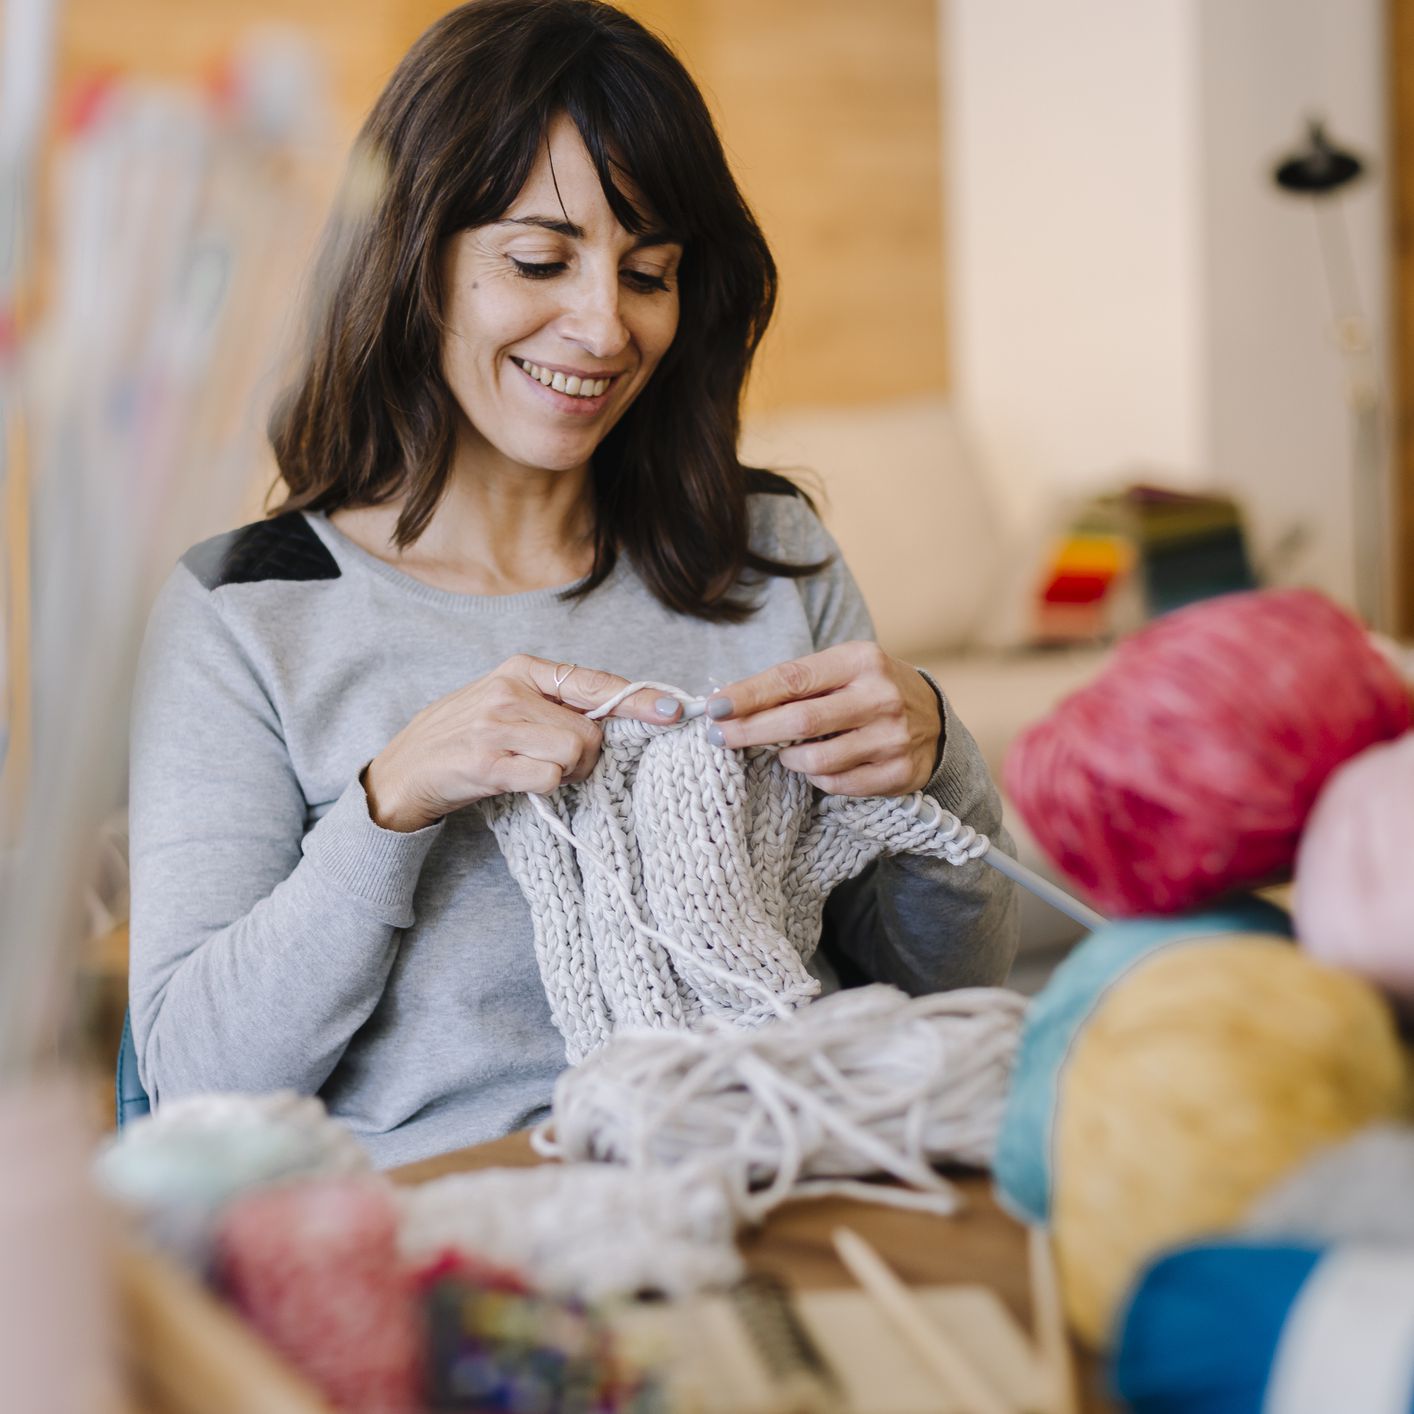 7 Health Benefits Of Knitting